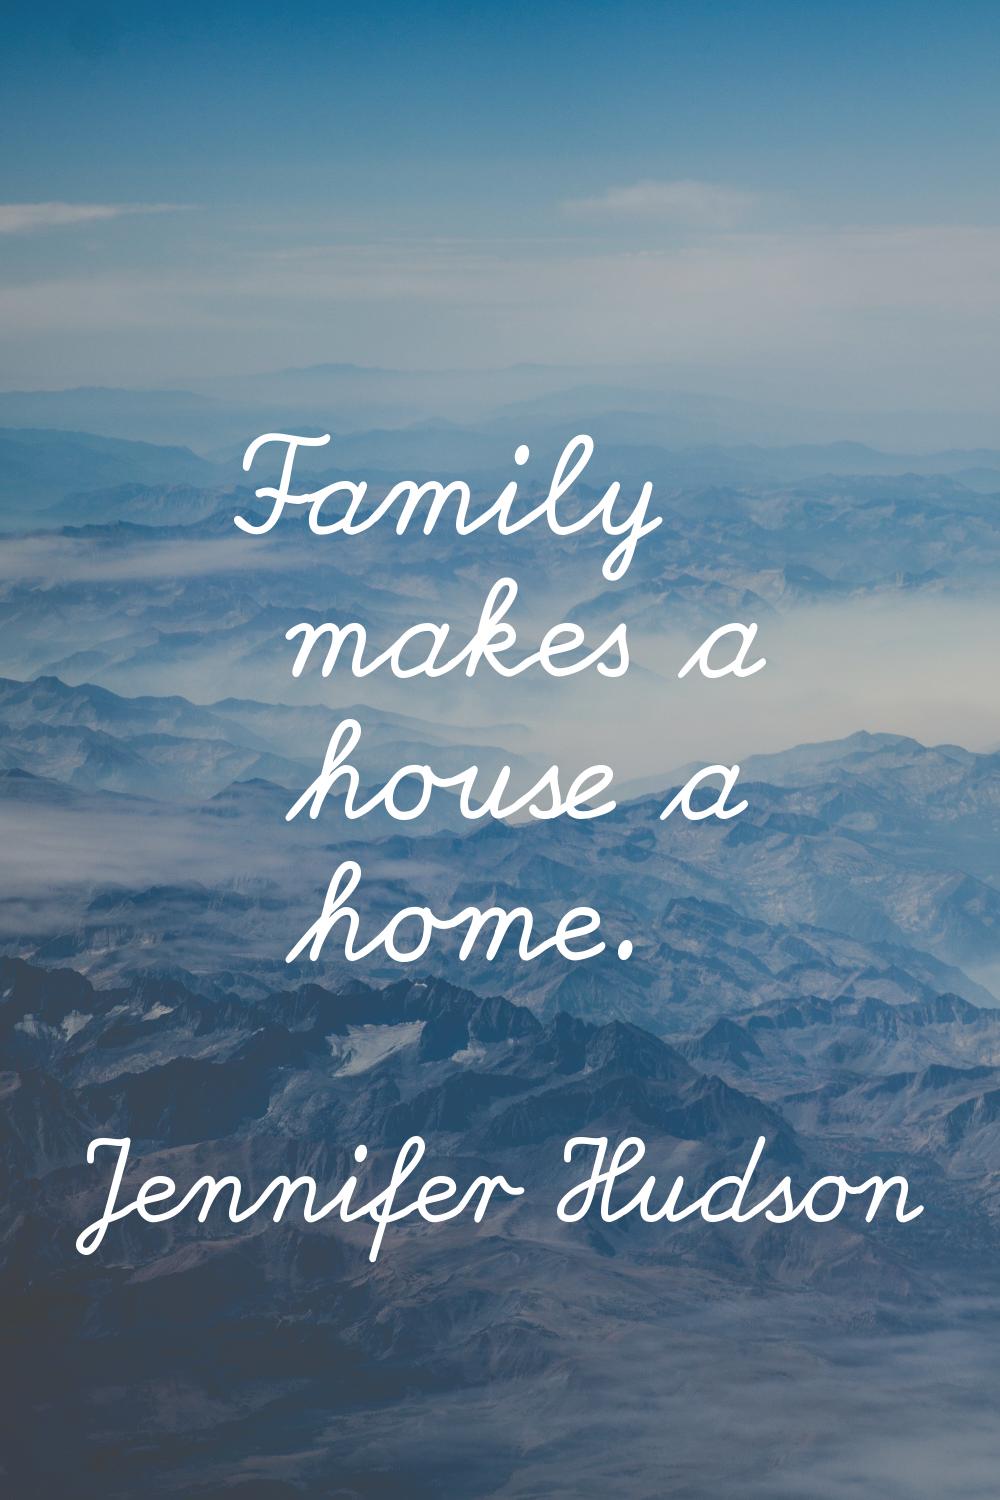 Family makes a house a home.